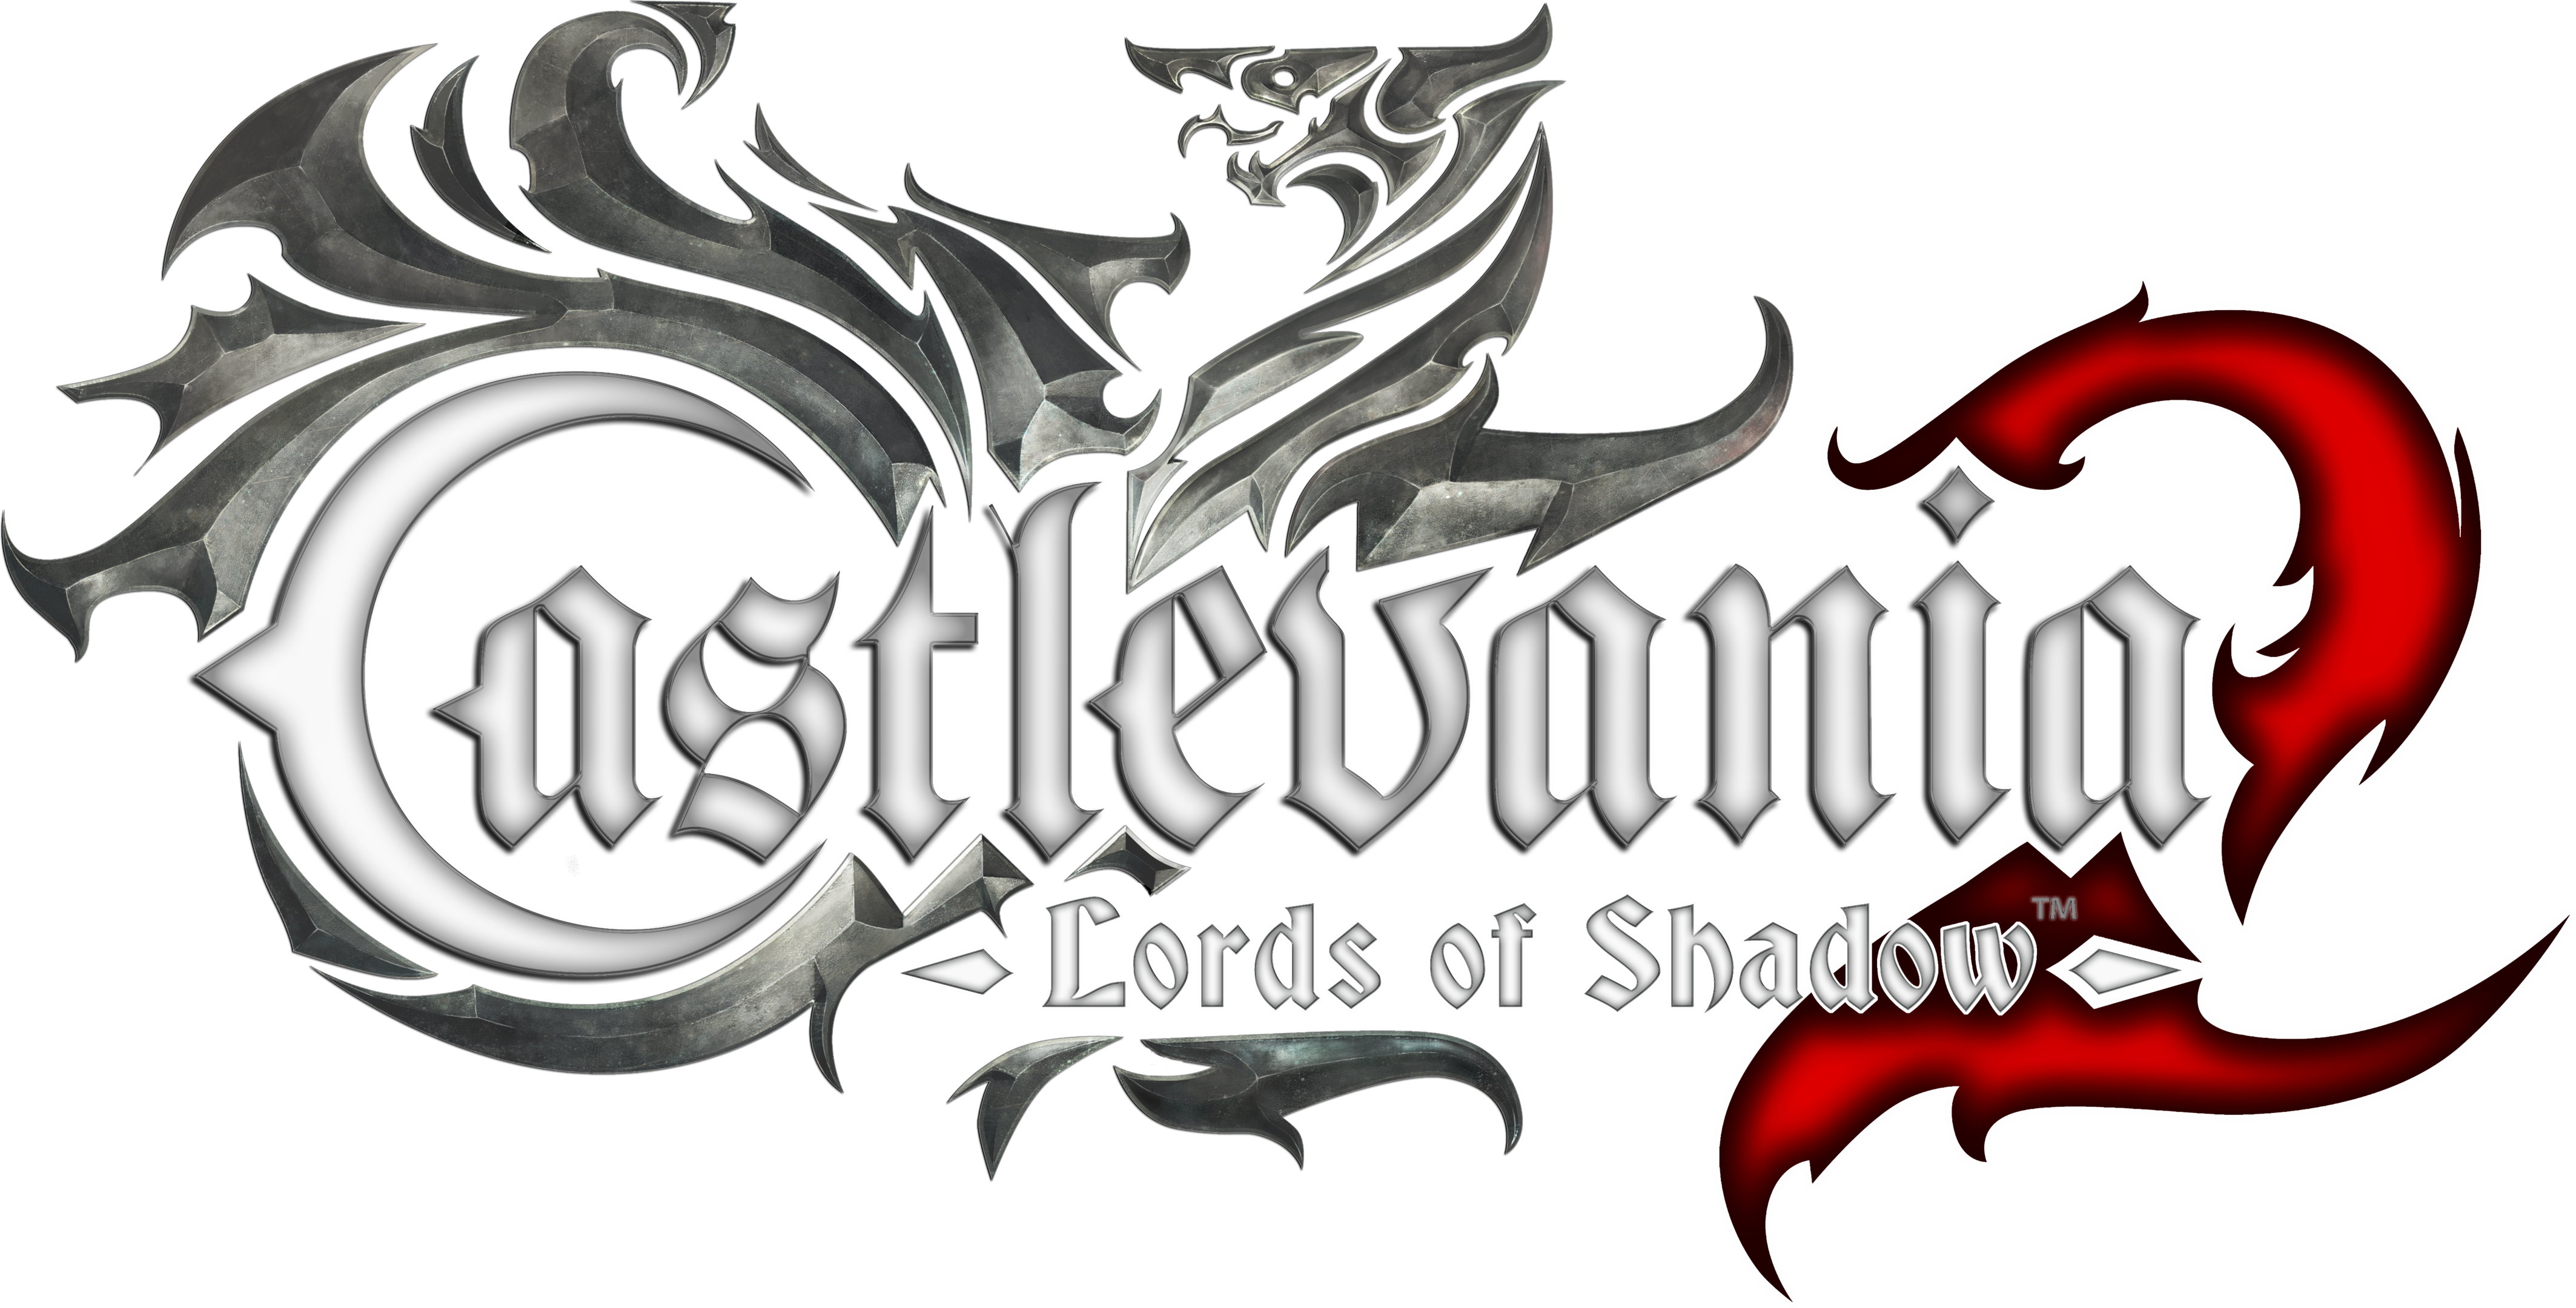 Steam castlevania lord of shadows фото 53